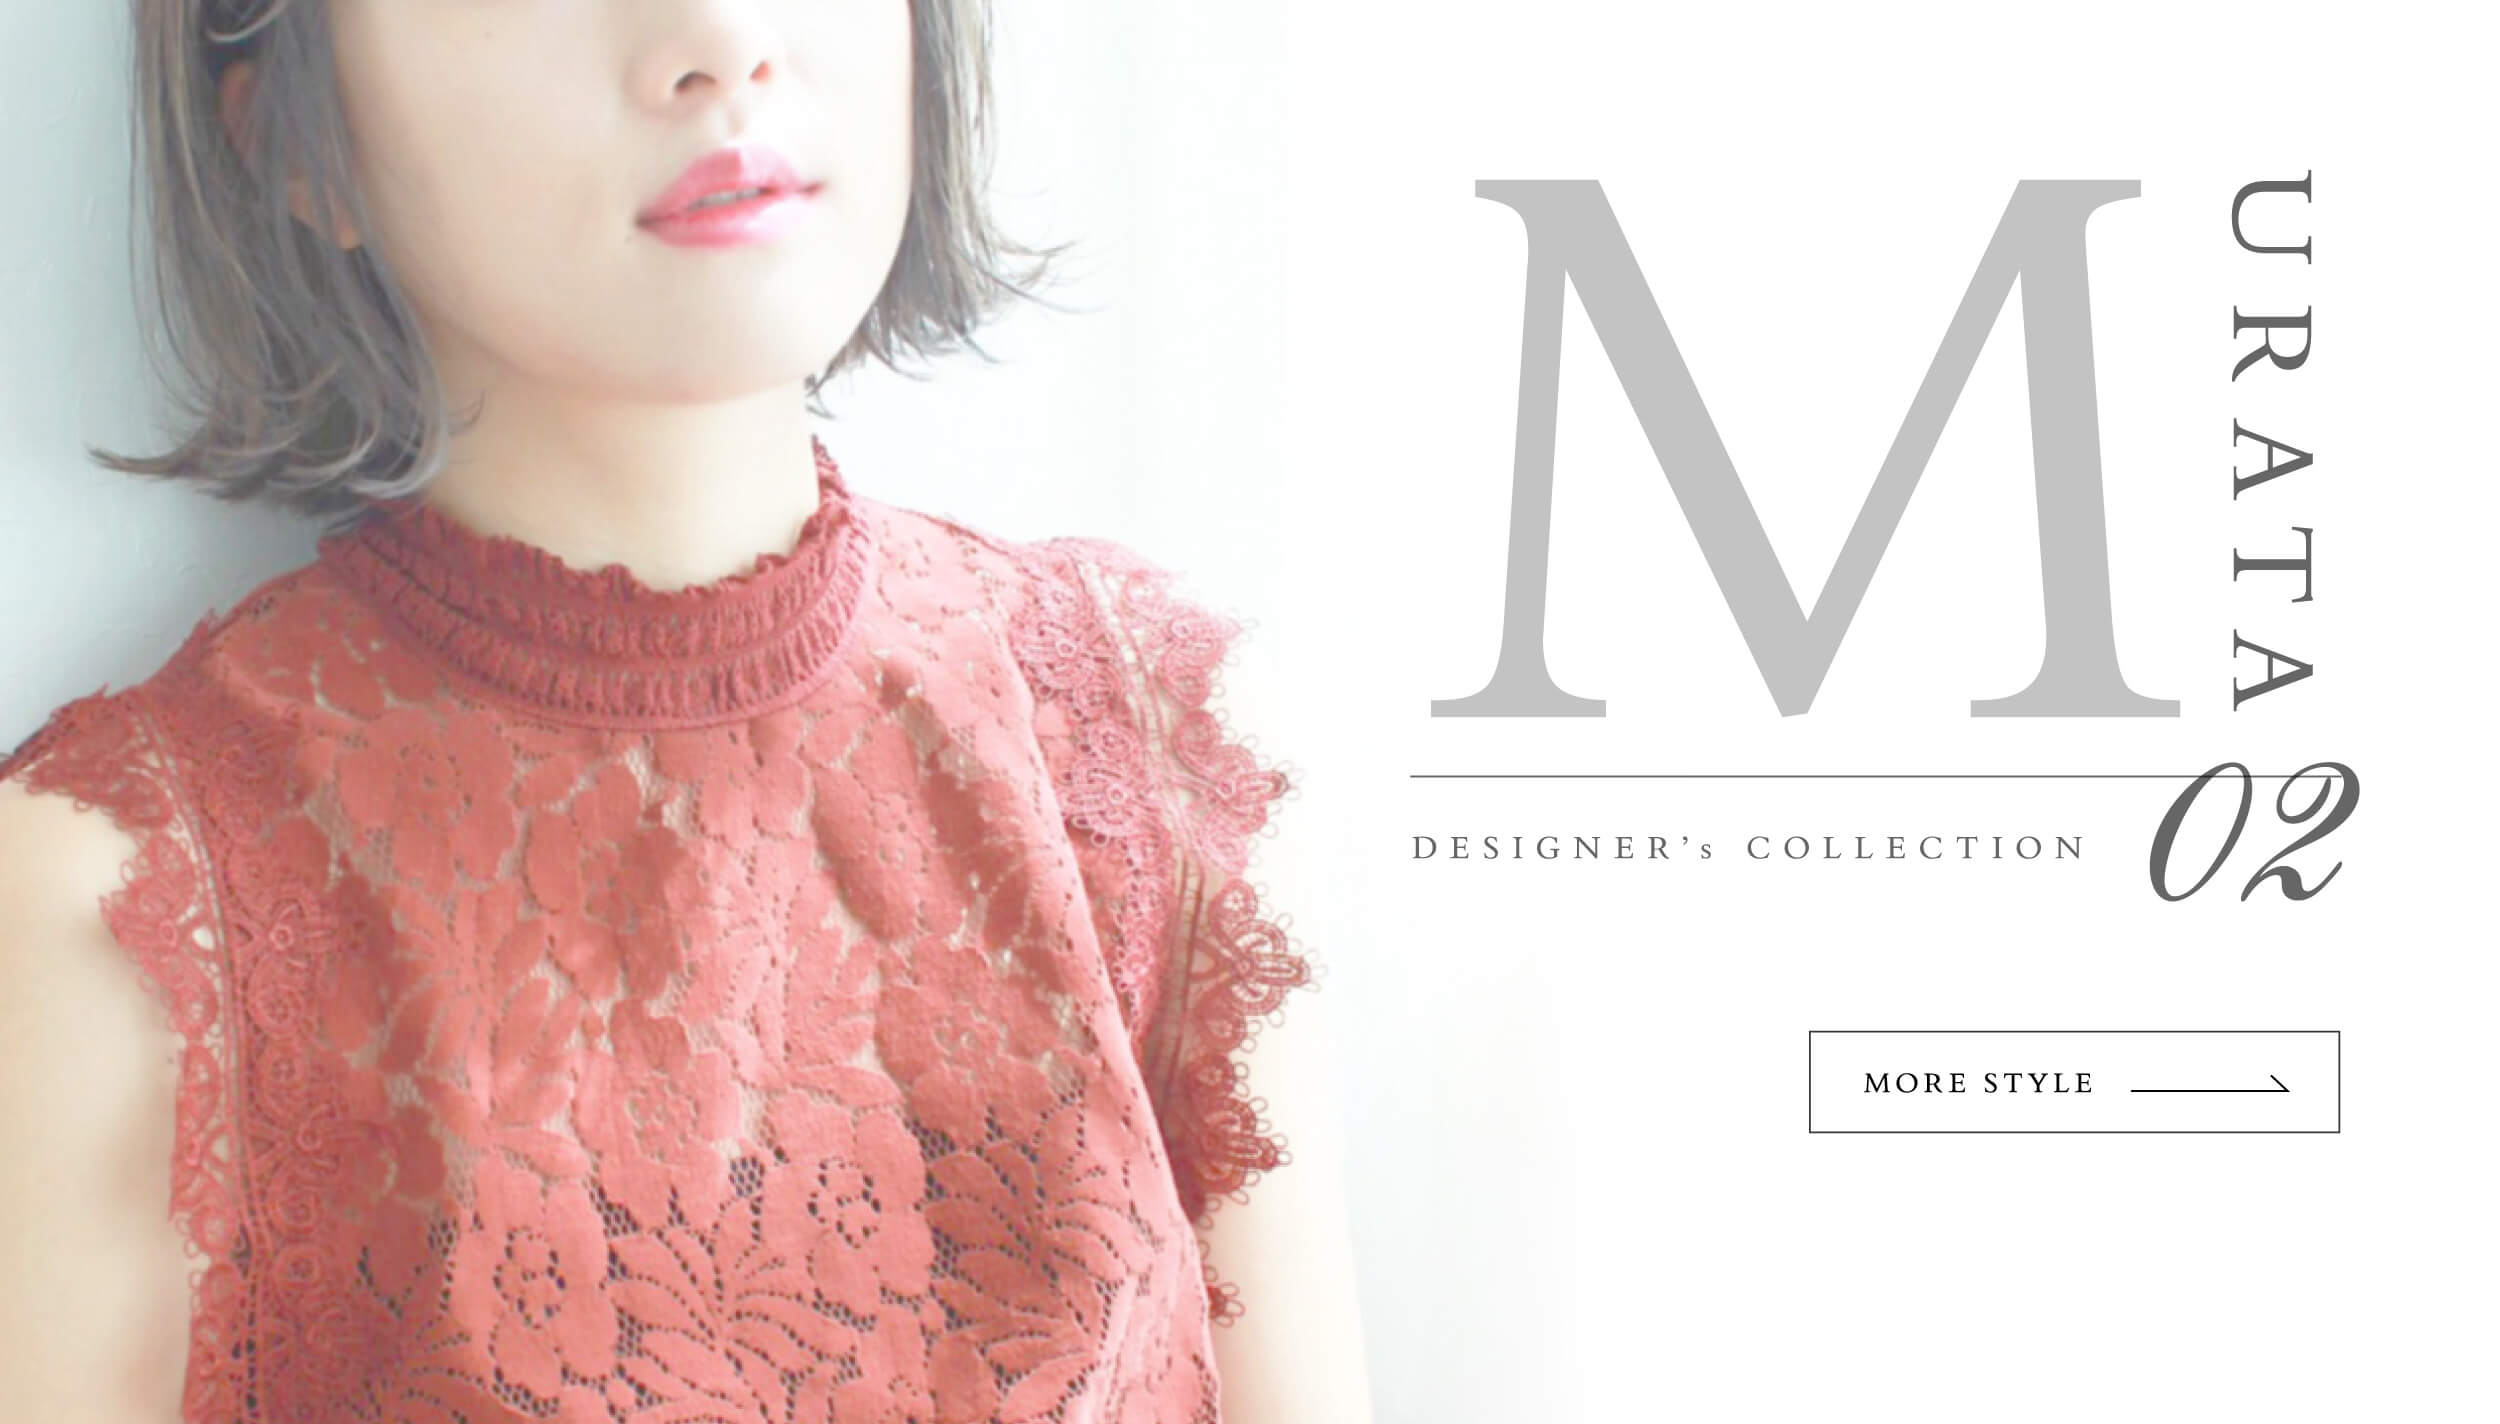 Designer's collection 02 MURATA